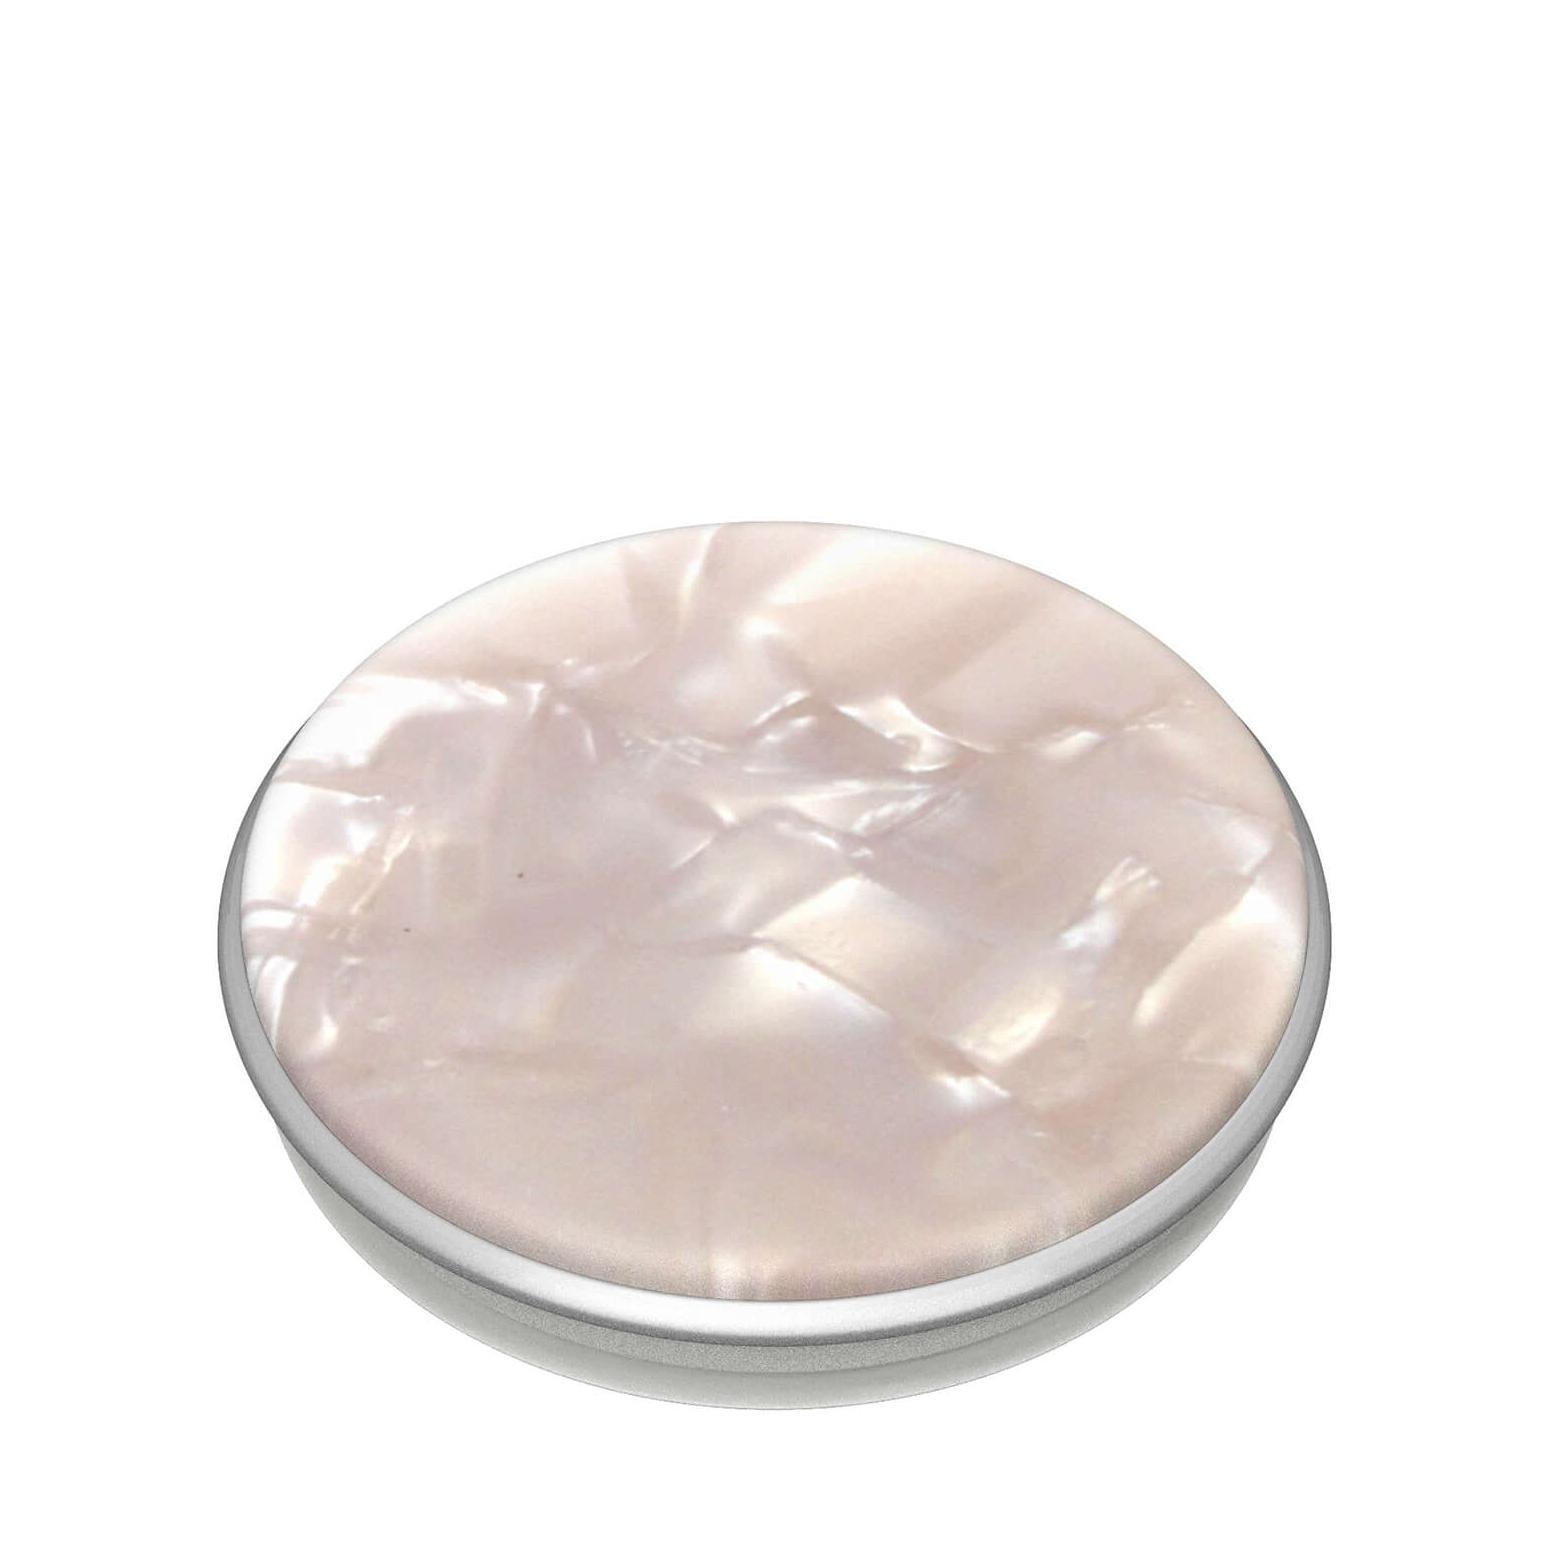 PopGrip Luxe Hållare/ställ - Acetate Pearl White